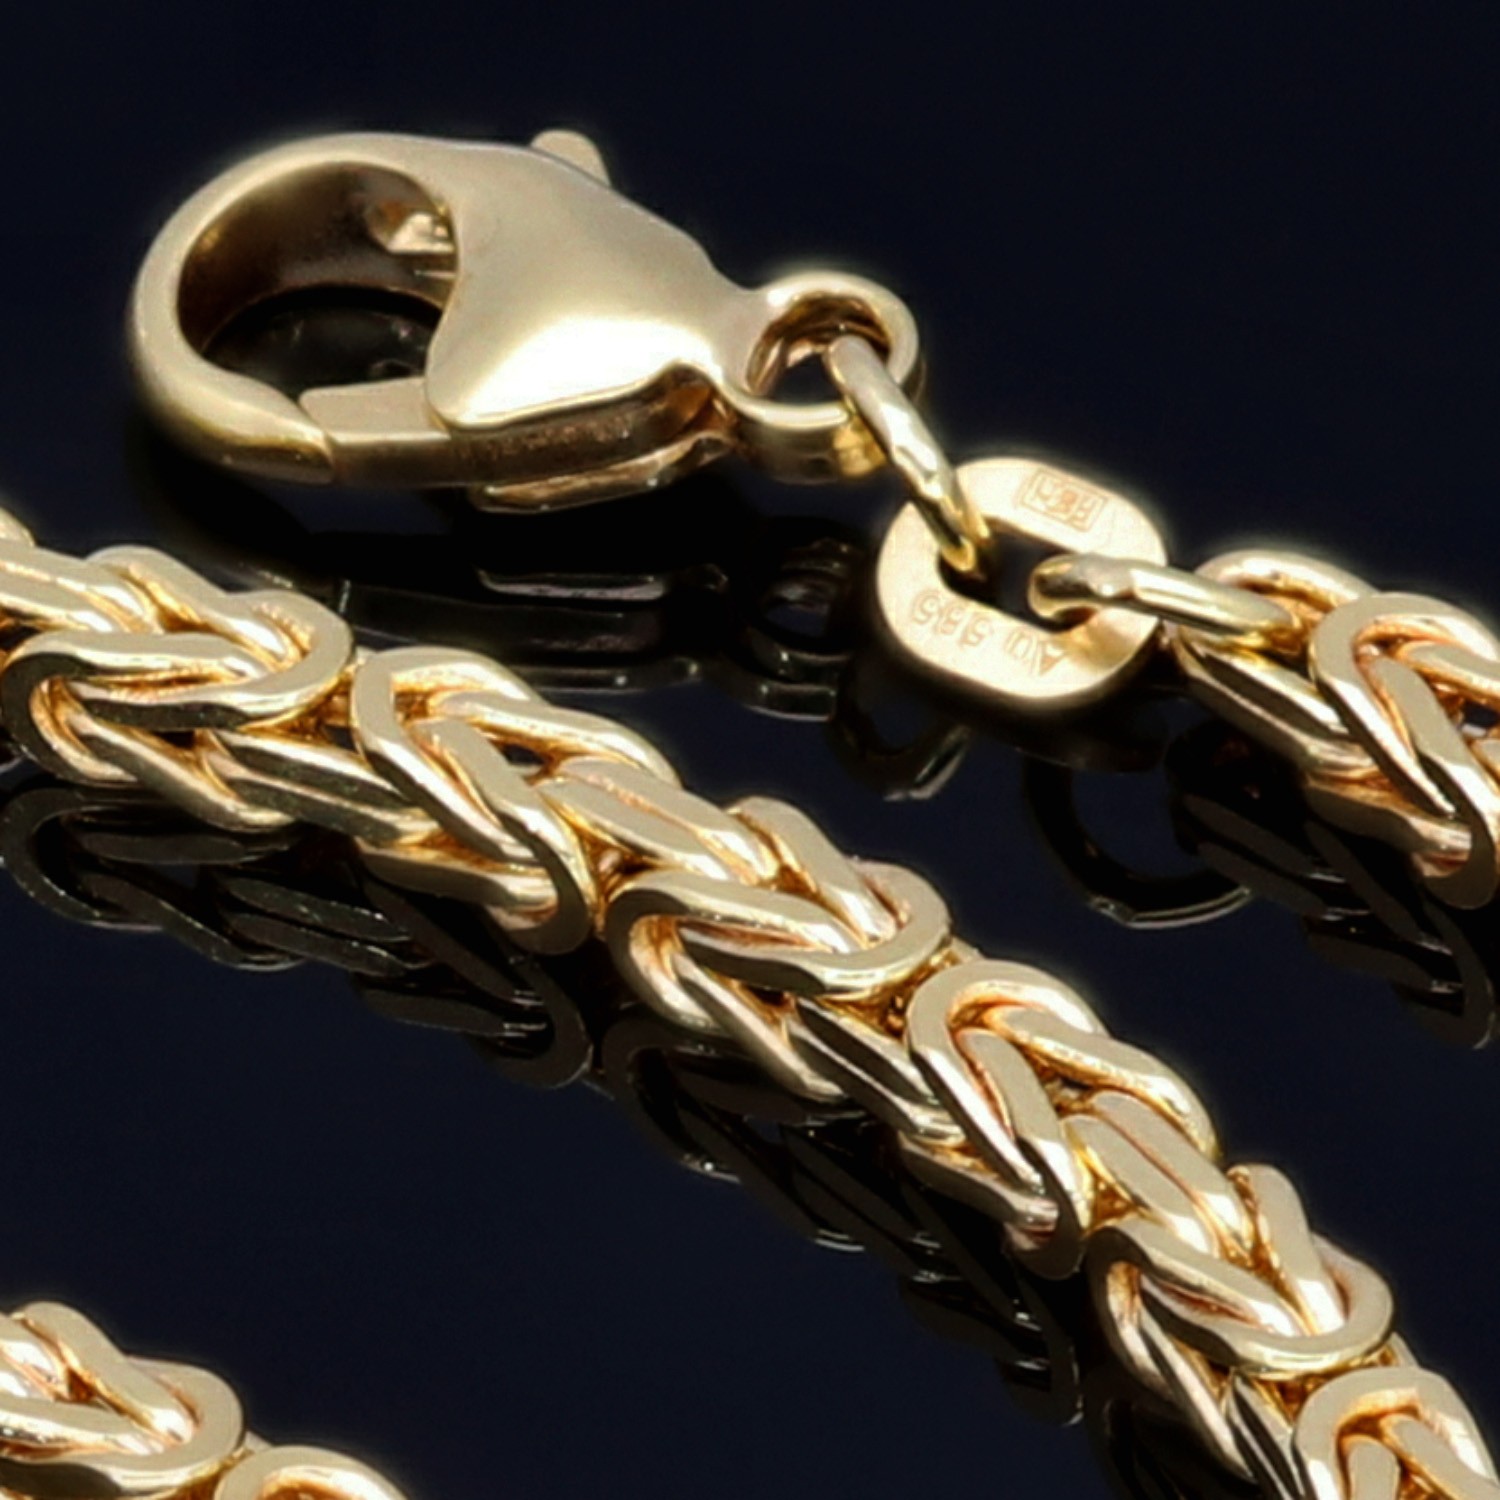 Königskette aus hochwertigem 585 Gold 60cm sensburg-aurum - 2,5mm, (14K)